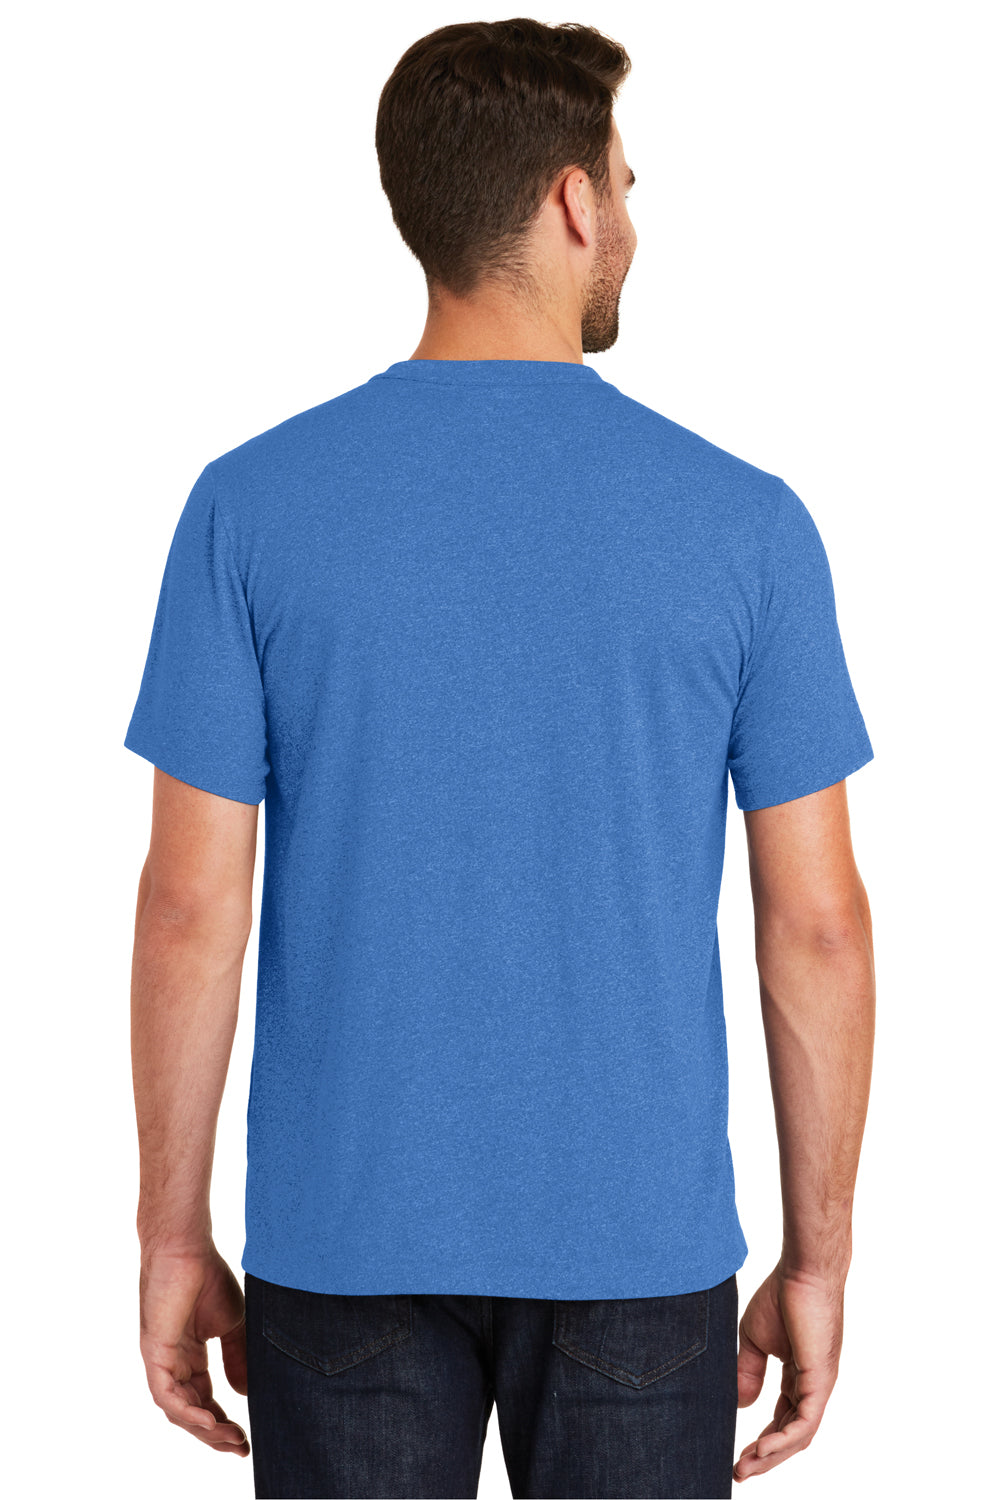 New Era NEA100 Mens Heritage Short Sleeve Crewneck T-Shirt Heather Royal Blue Back